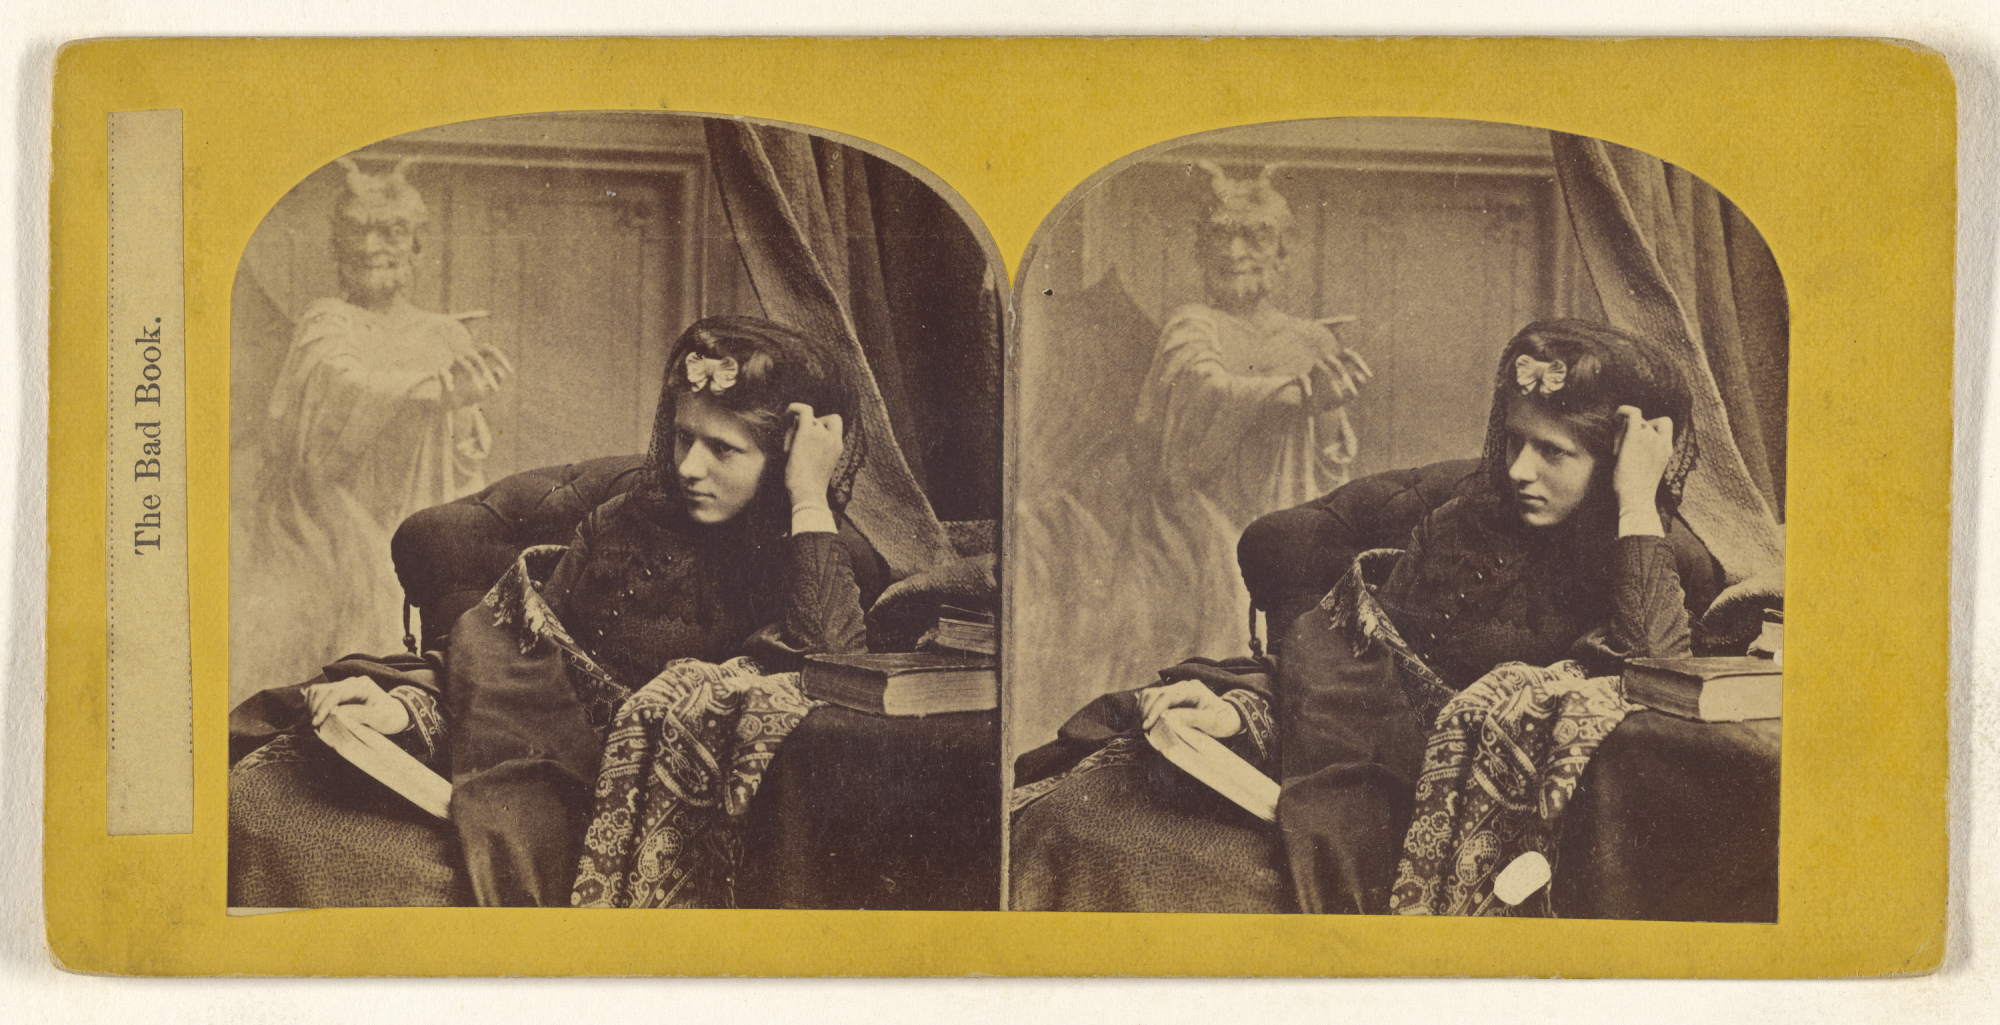 The Bad book, cliché stéréoscopique anonyme, 1860, collections du Getty Museum